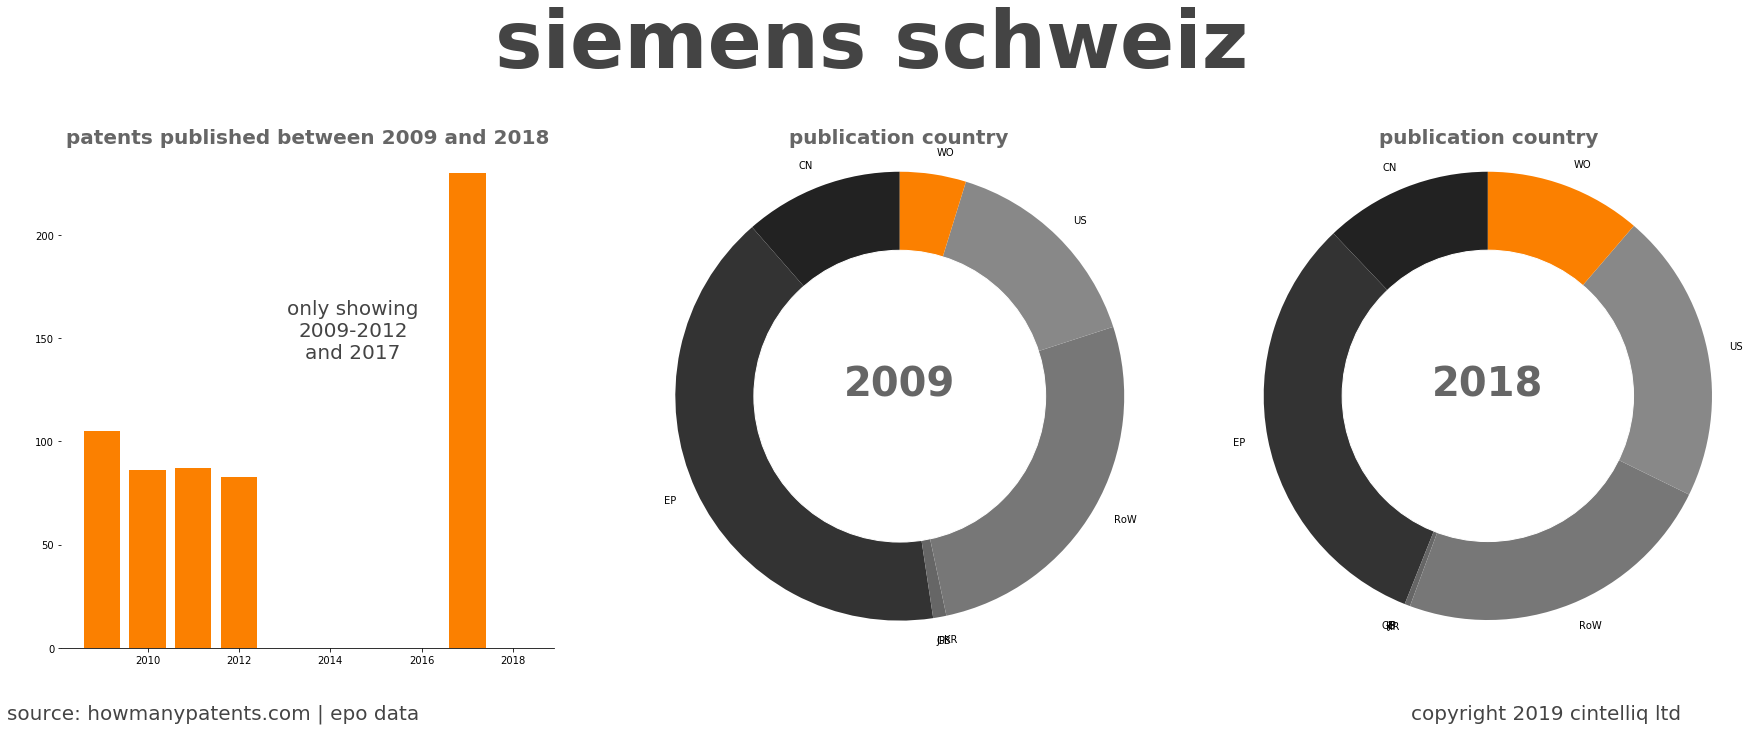 summary of patents for Siemens Schweiz